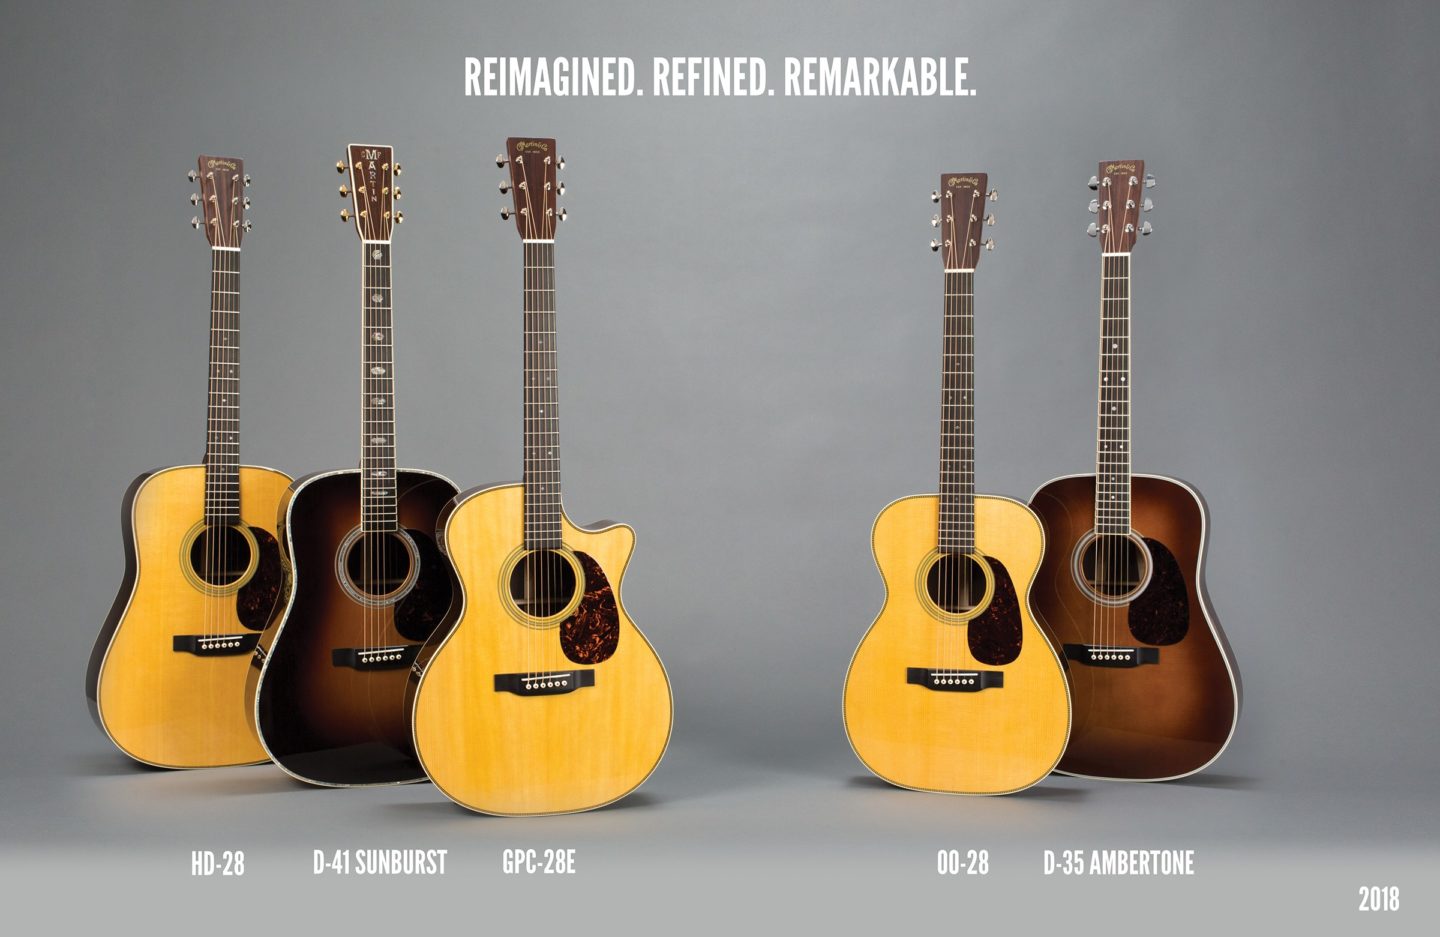 Martin Guitar to Introduce Reimagined Standard Series Guitars at 2018 Winter NAMM